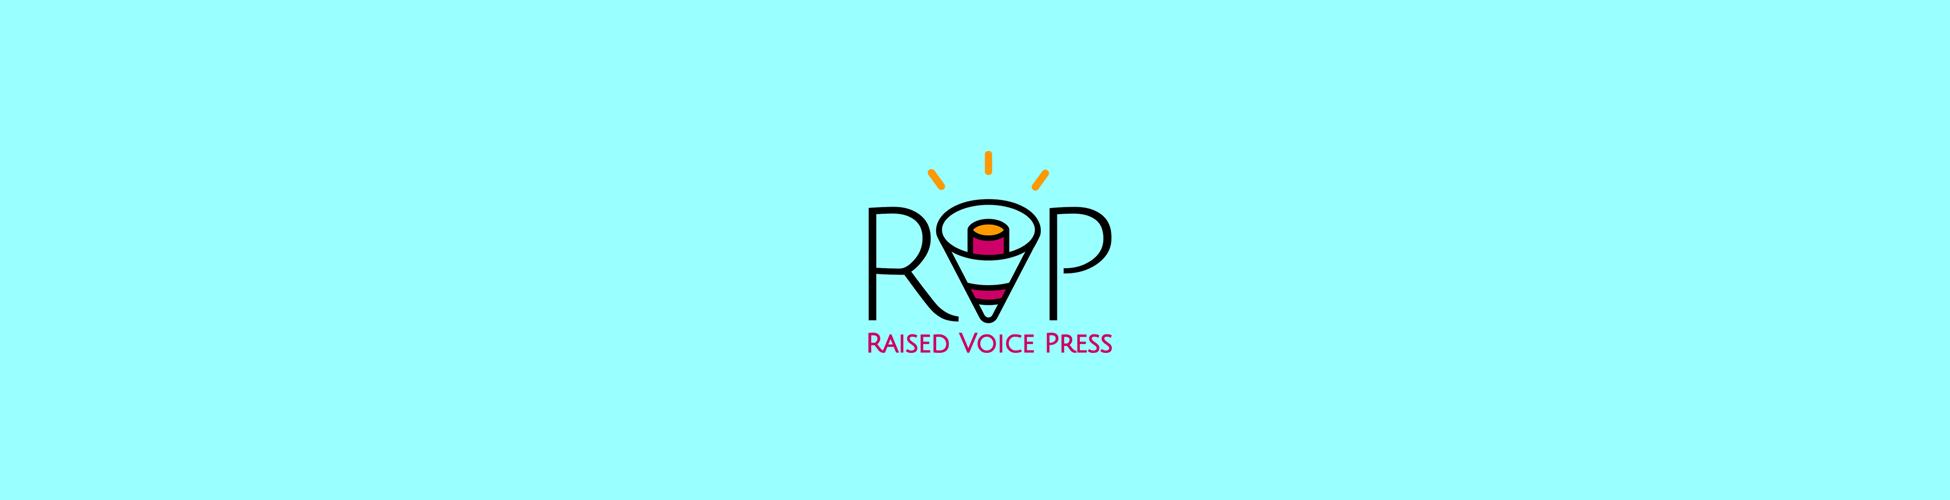 Raised Voice Press logo